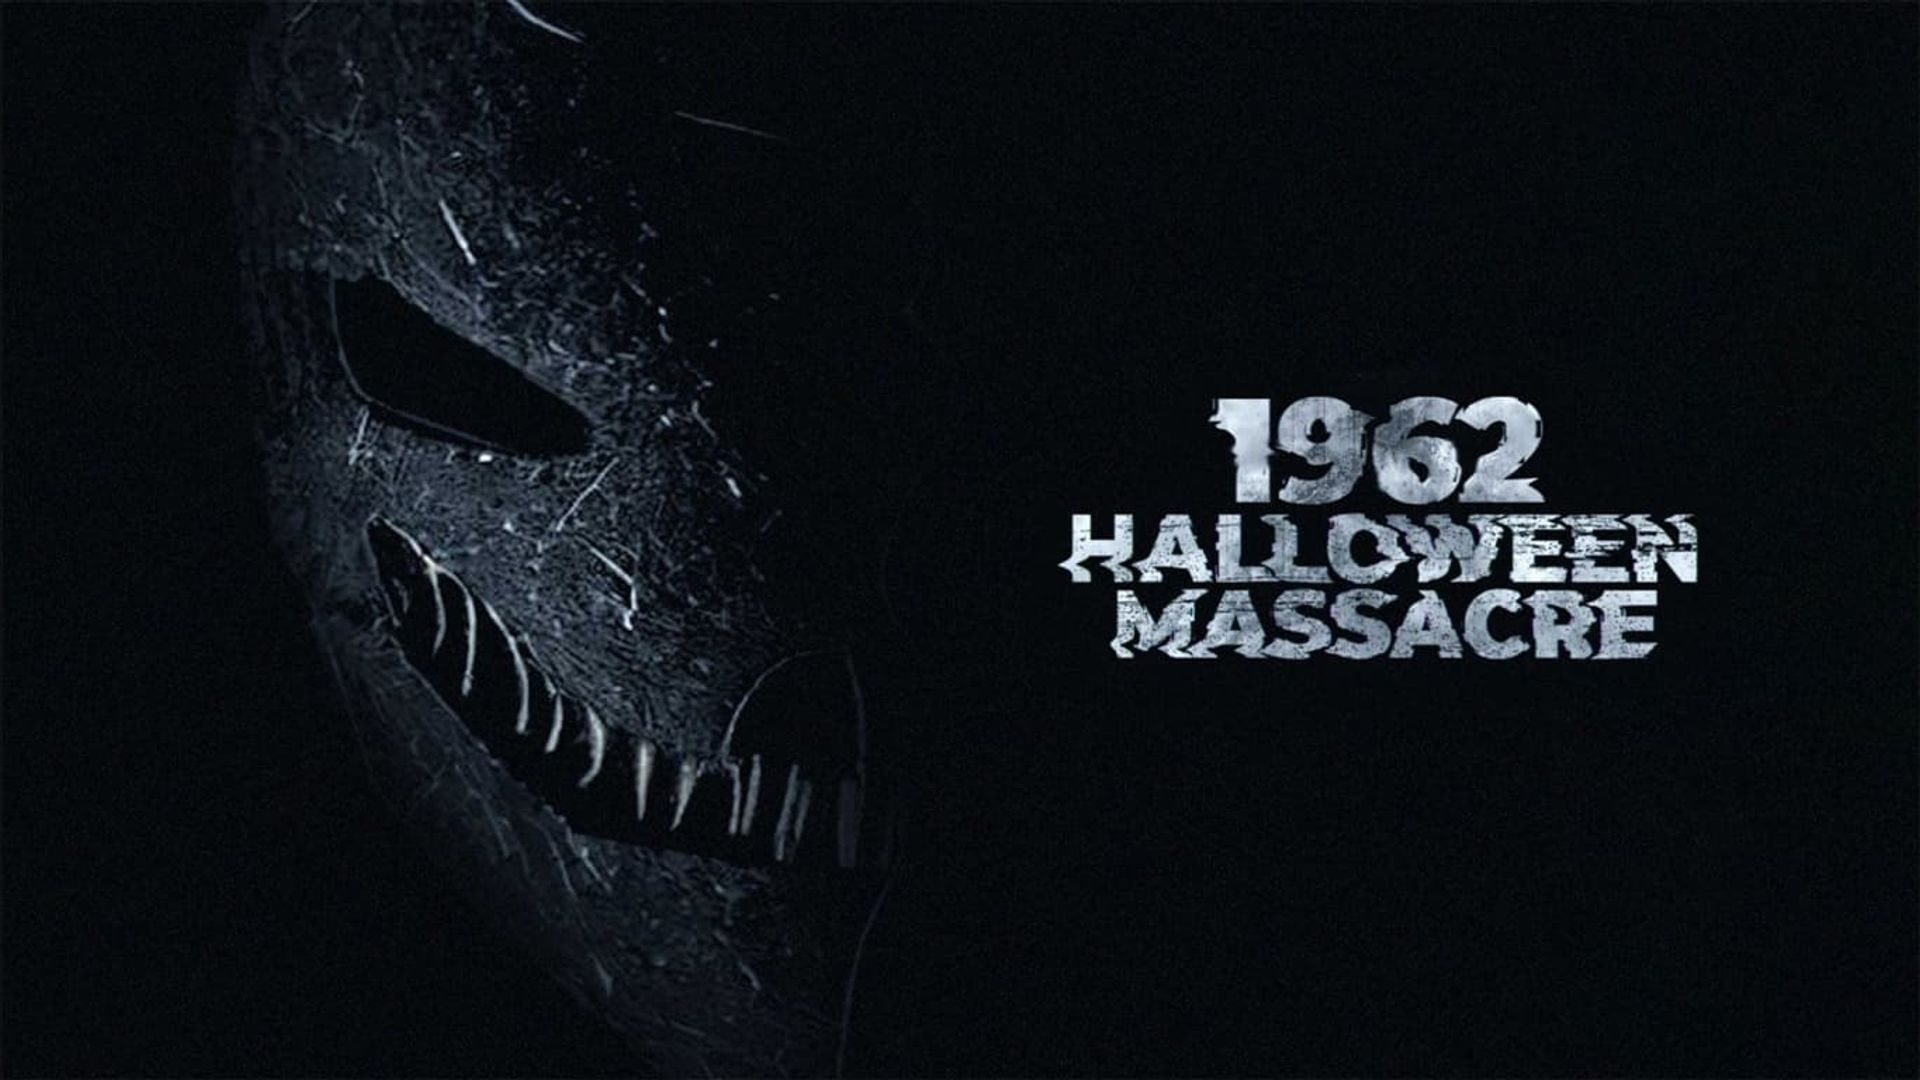 1962 Halloween Massacre background